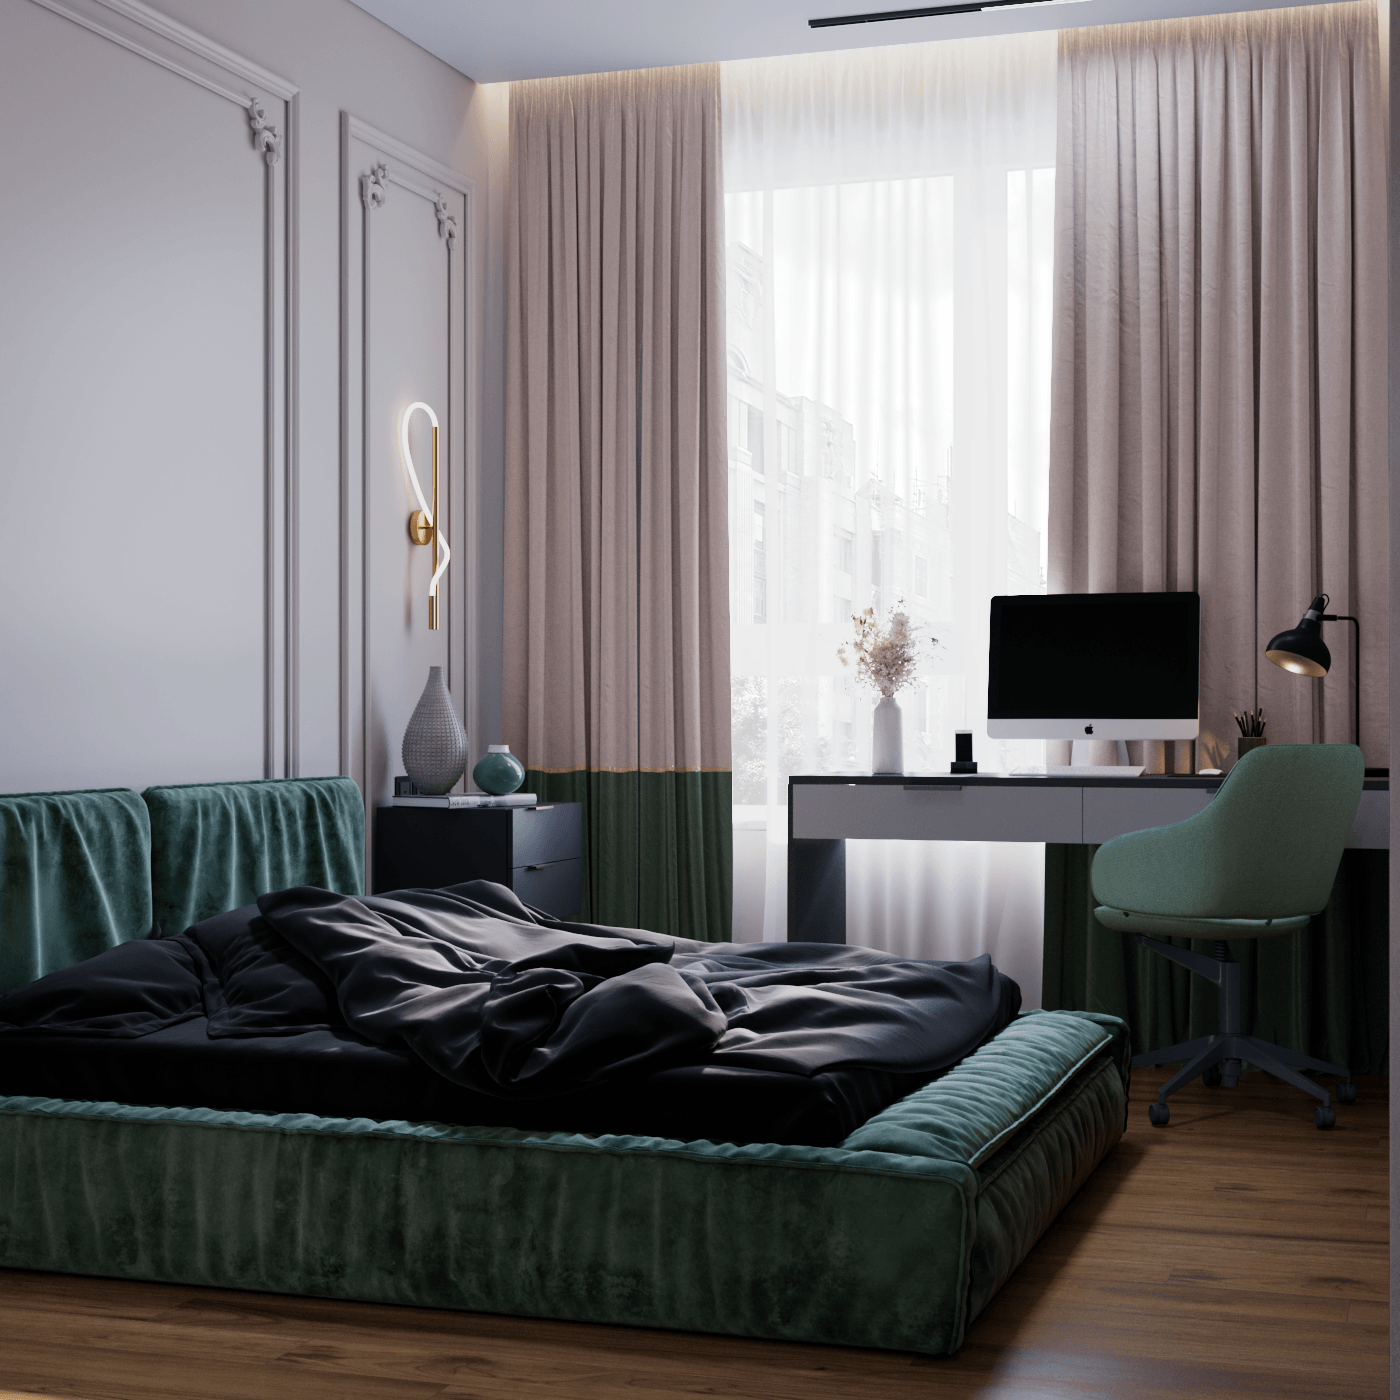 green bed interior design  visualization modern art deco blue sofa dark kitchen corona render  3ds max women apartment